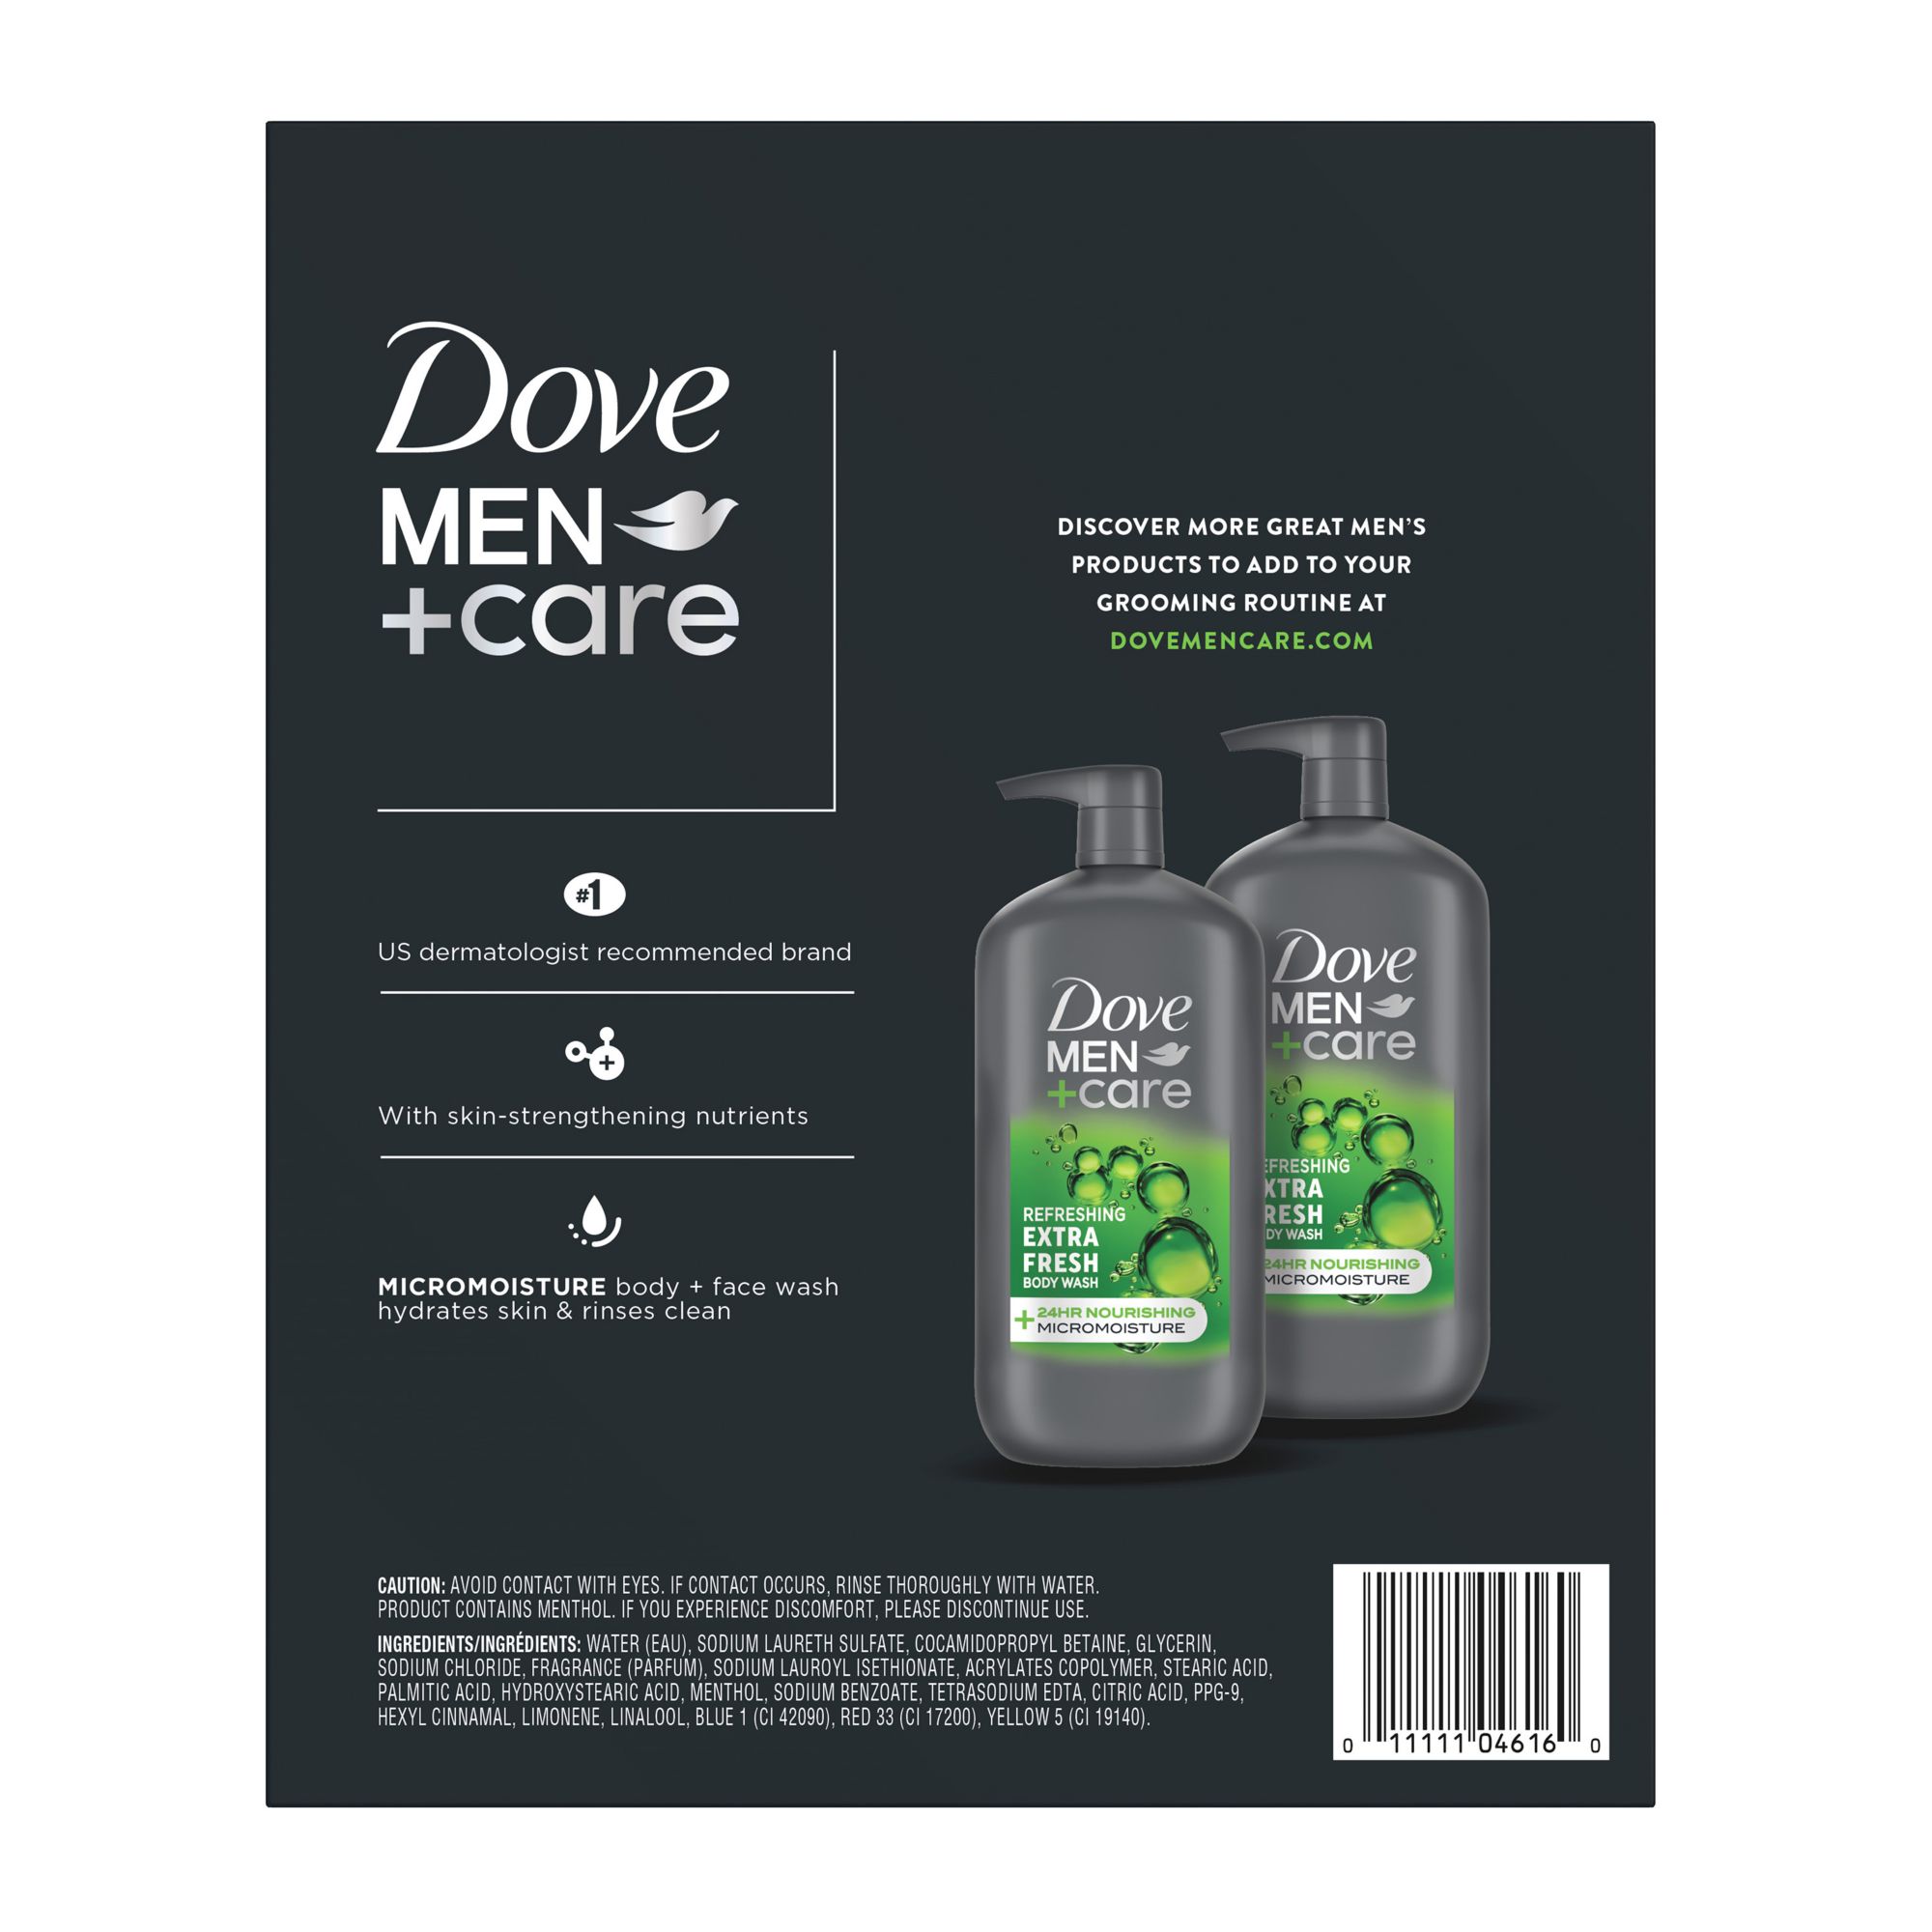 24 Packs : Dove Men+Care Body and Face Bar, Extra Fresh 4 oz, 2 Bar